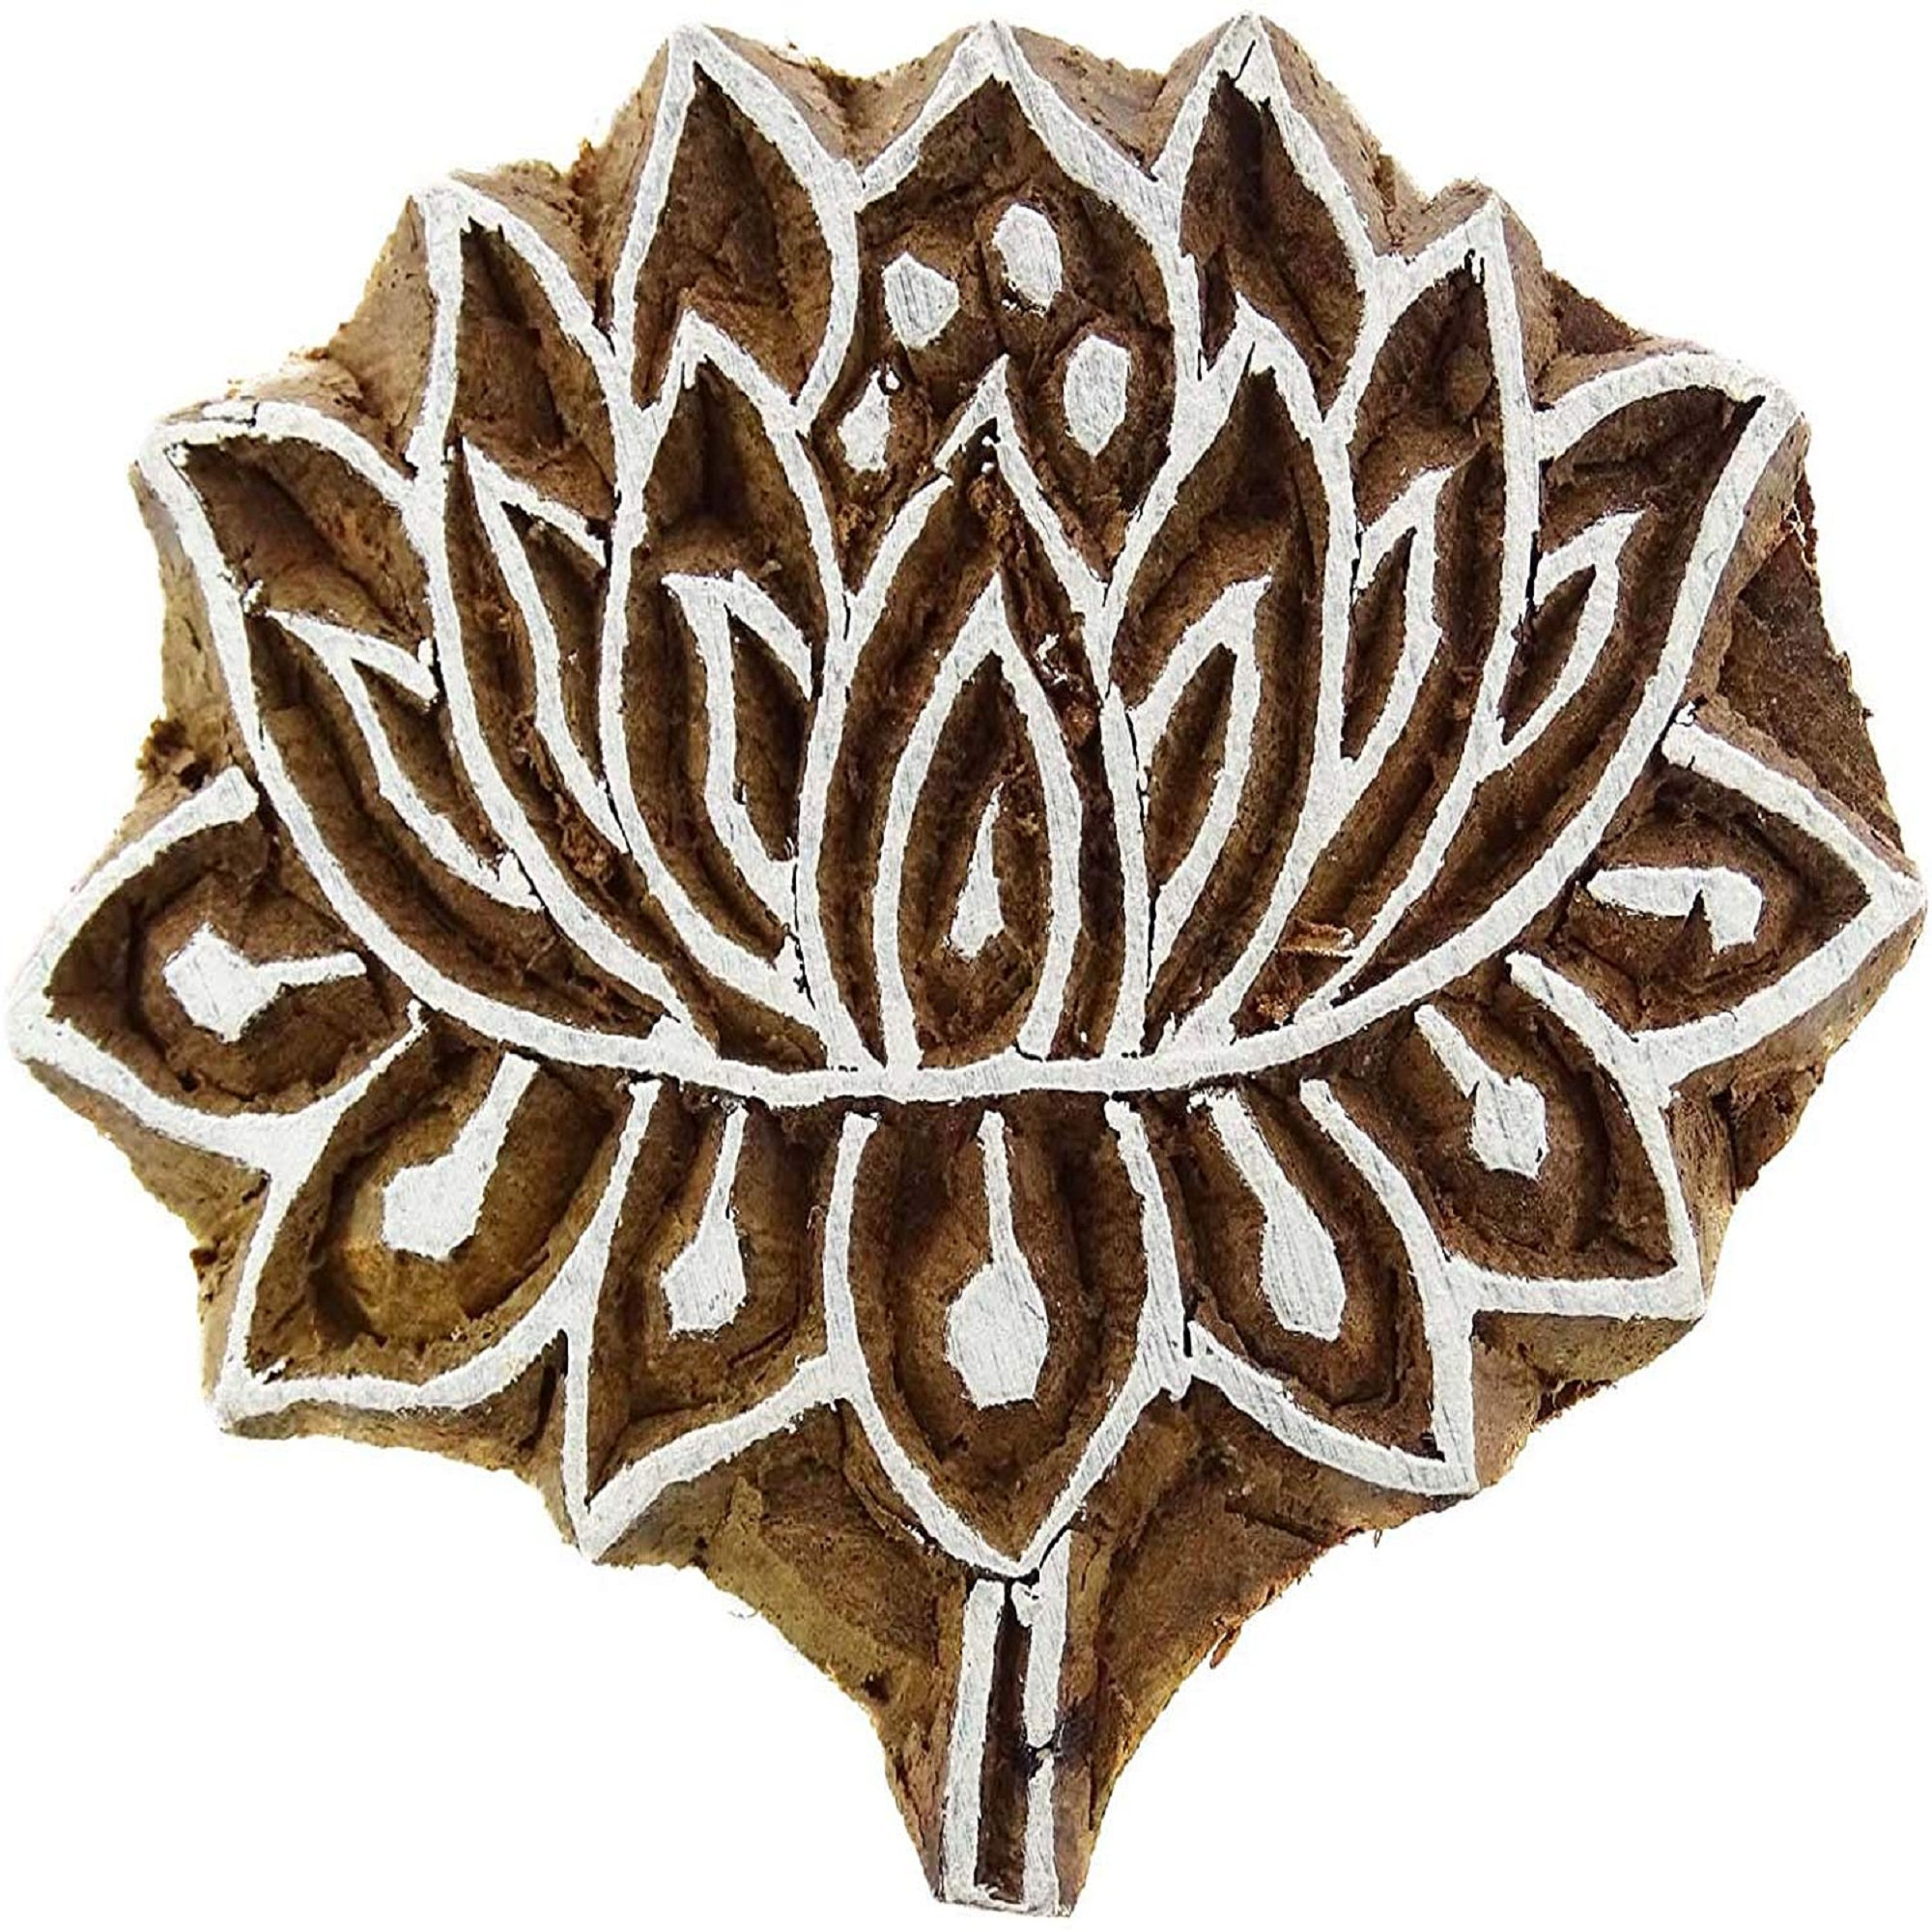  ibaexports Handcarved Lotus Printing Block Wood Block